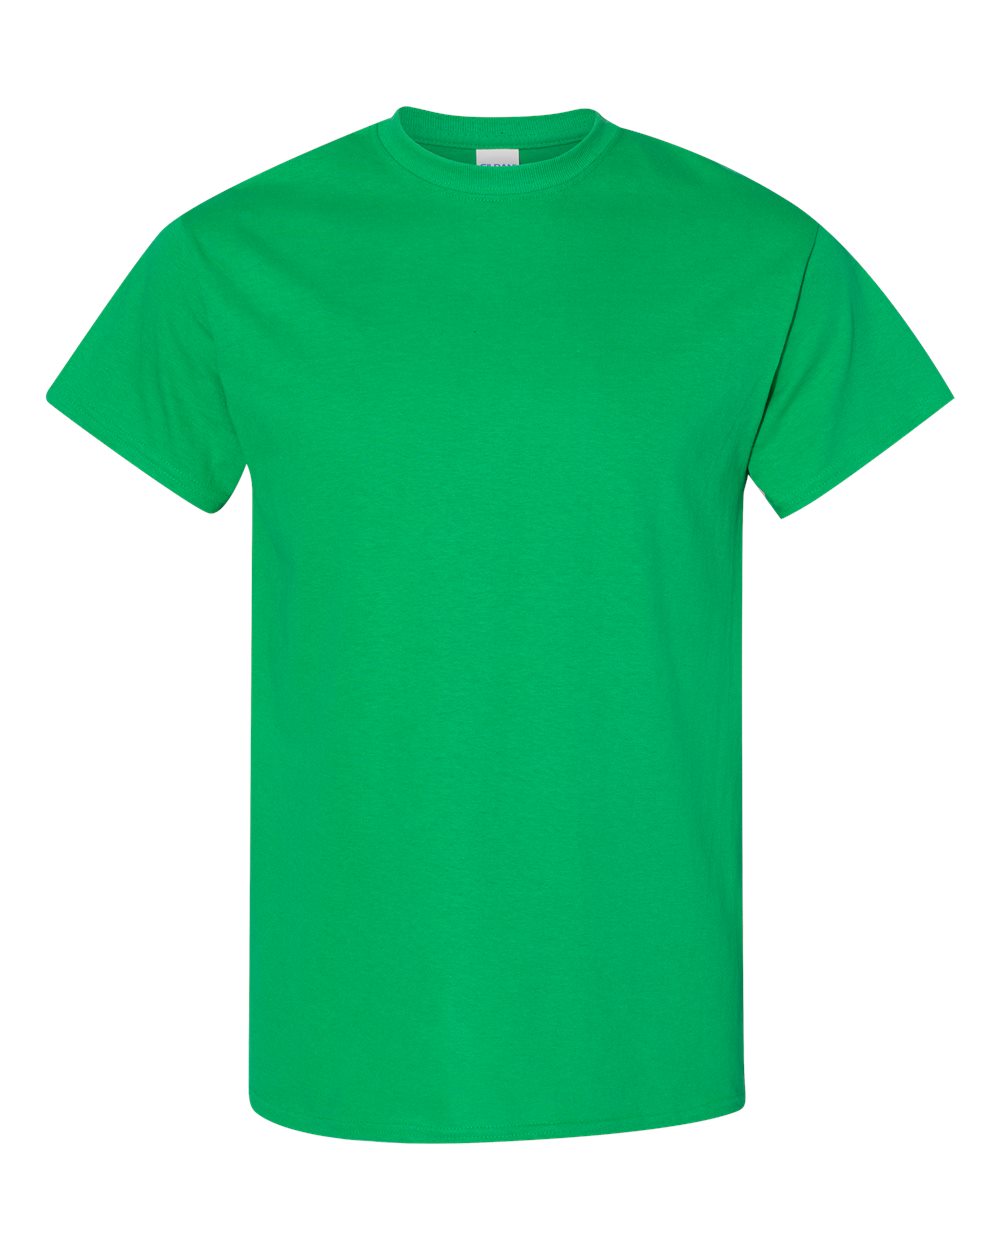 Pretreated Gildan 5000 Heavy Cotton T-Shirt - Irish Green